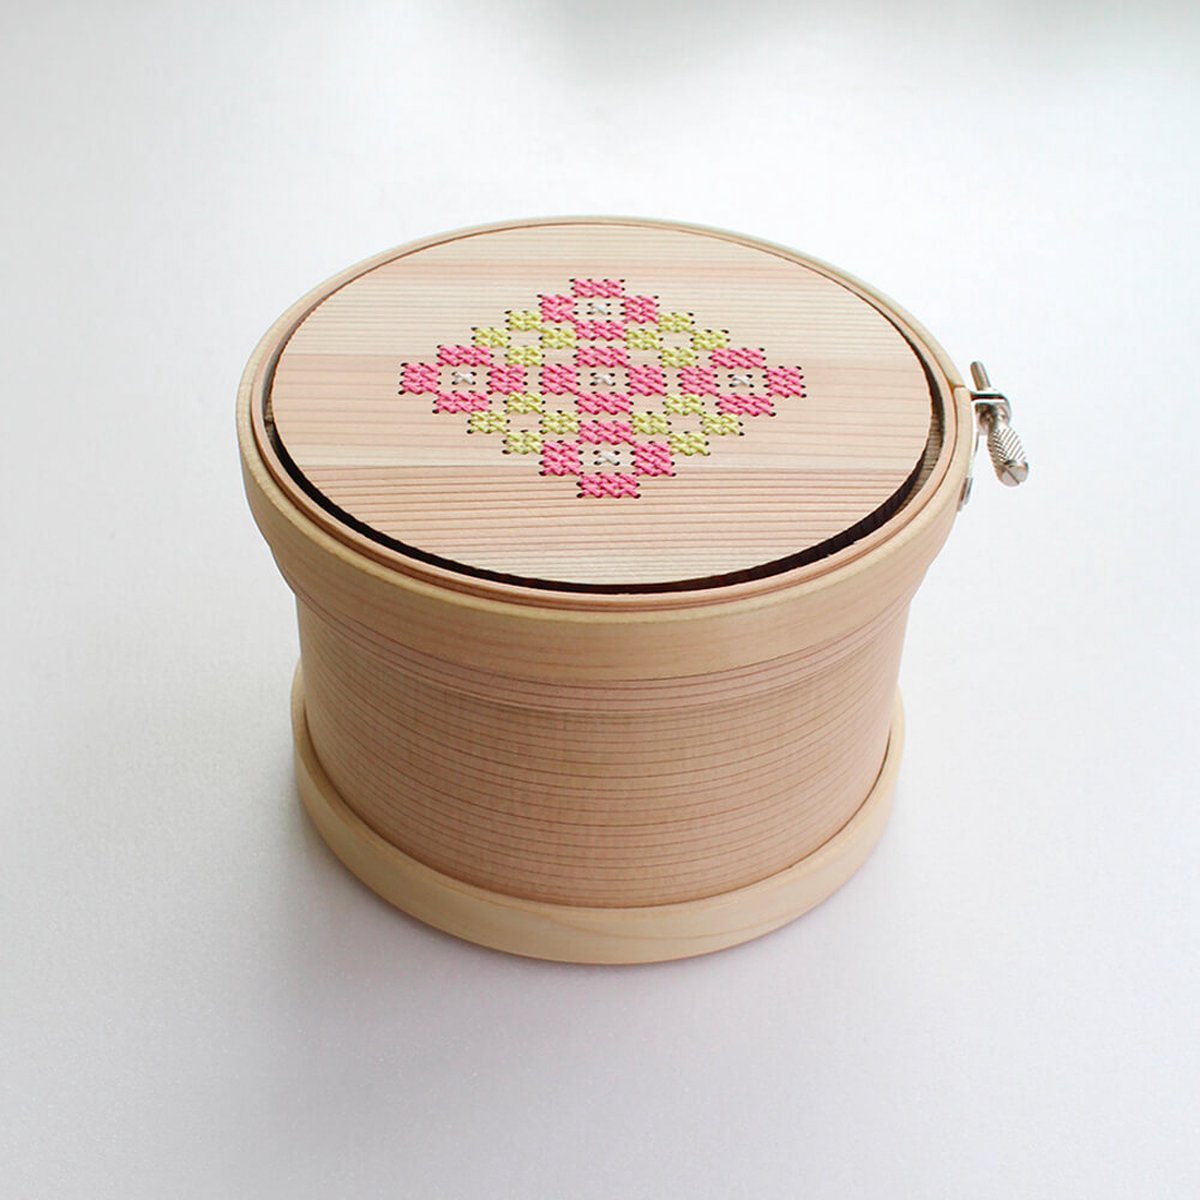 Cohana Magewappa opbergbox borduurring 12cm geel-roze